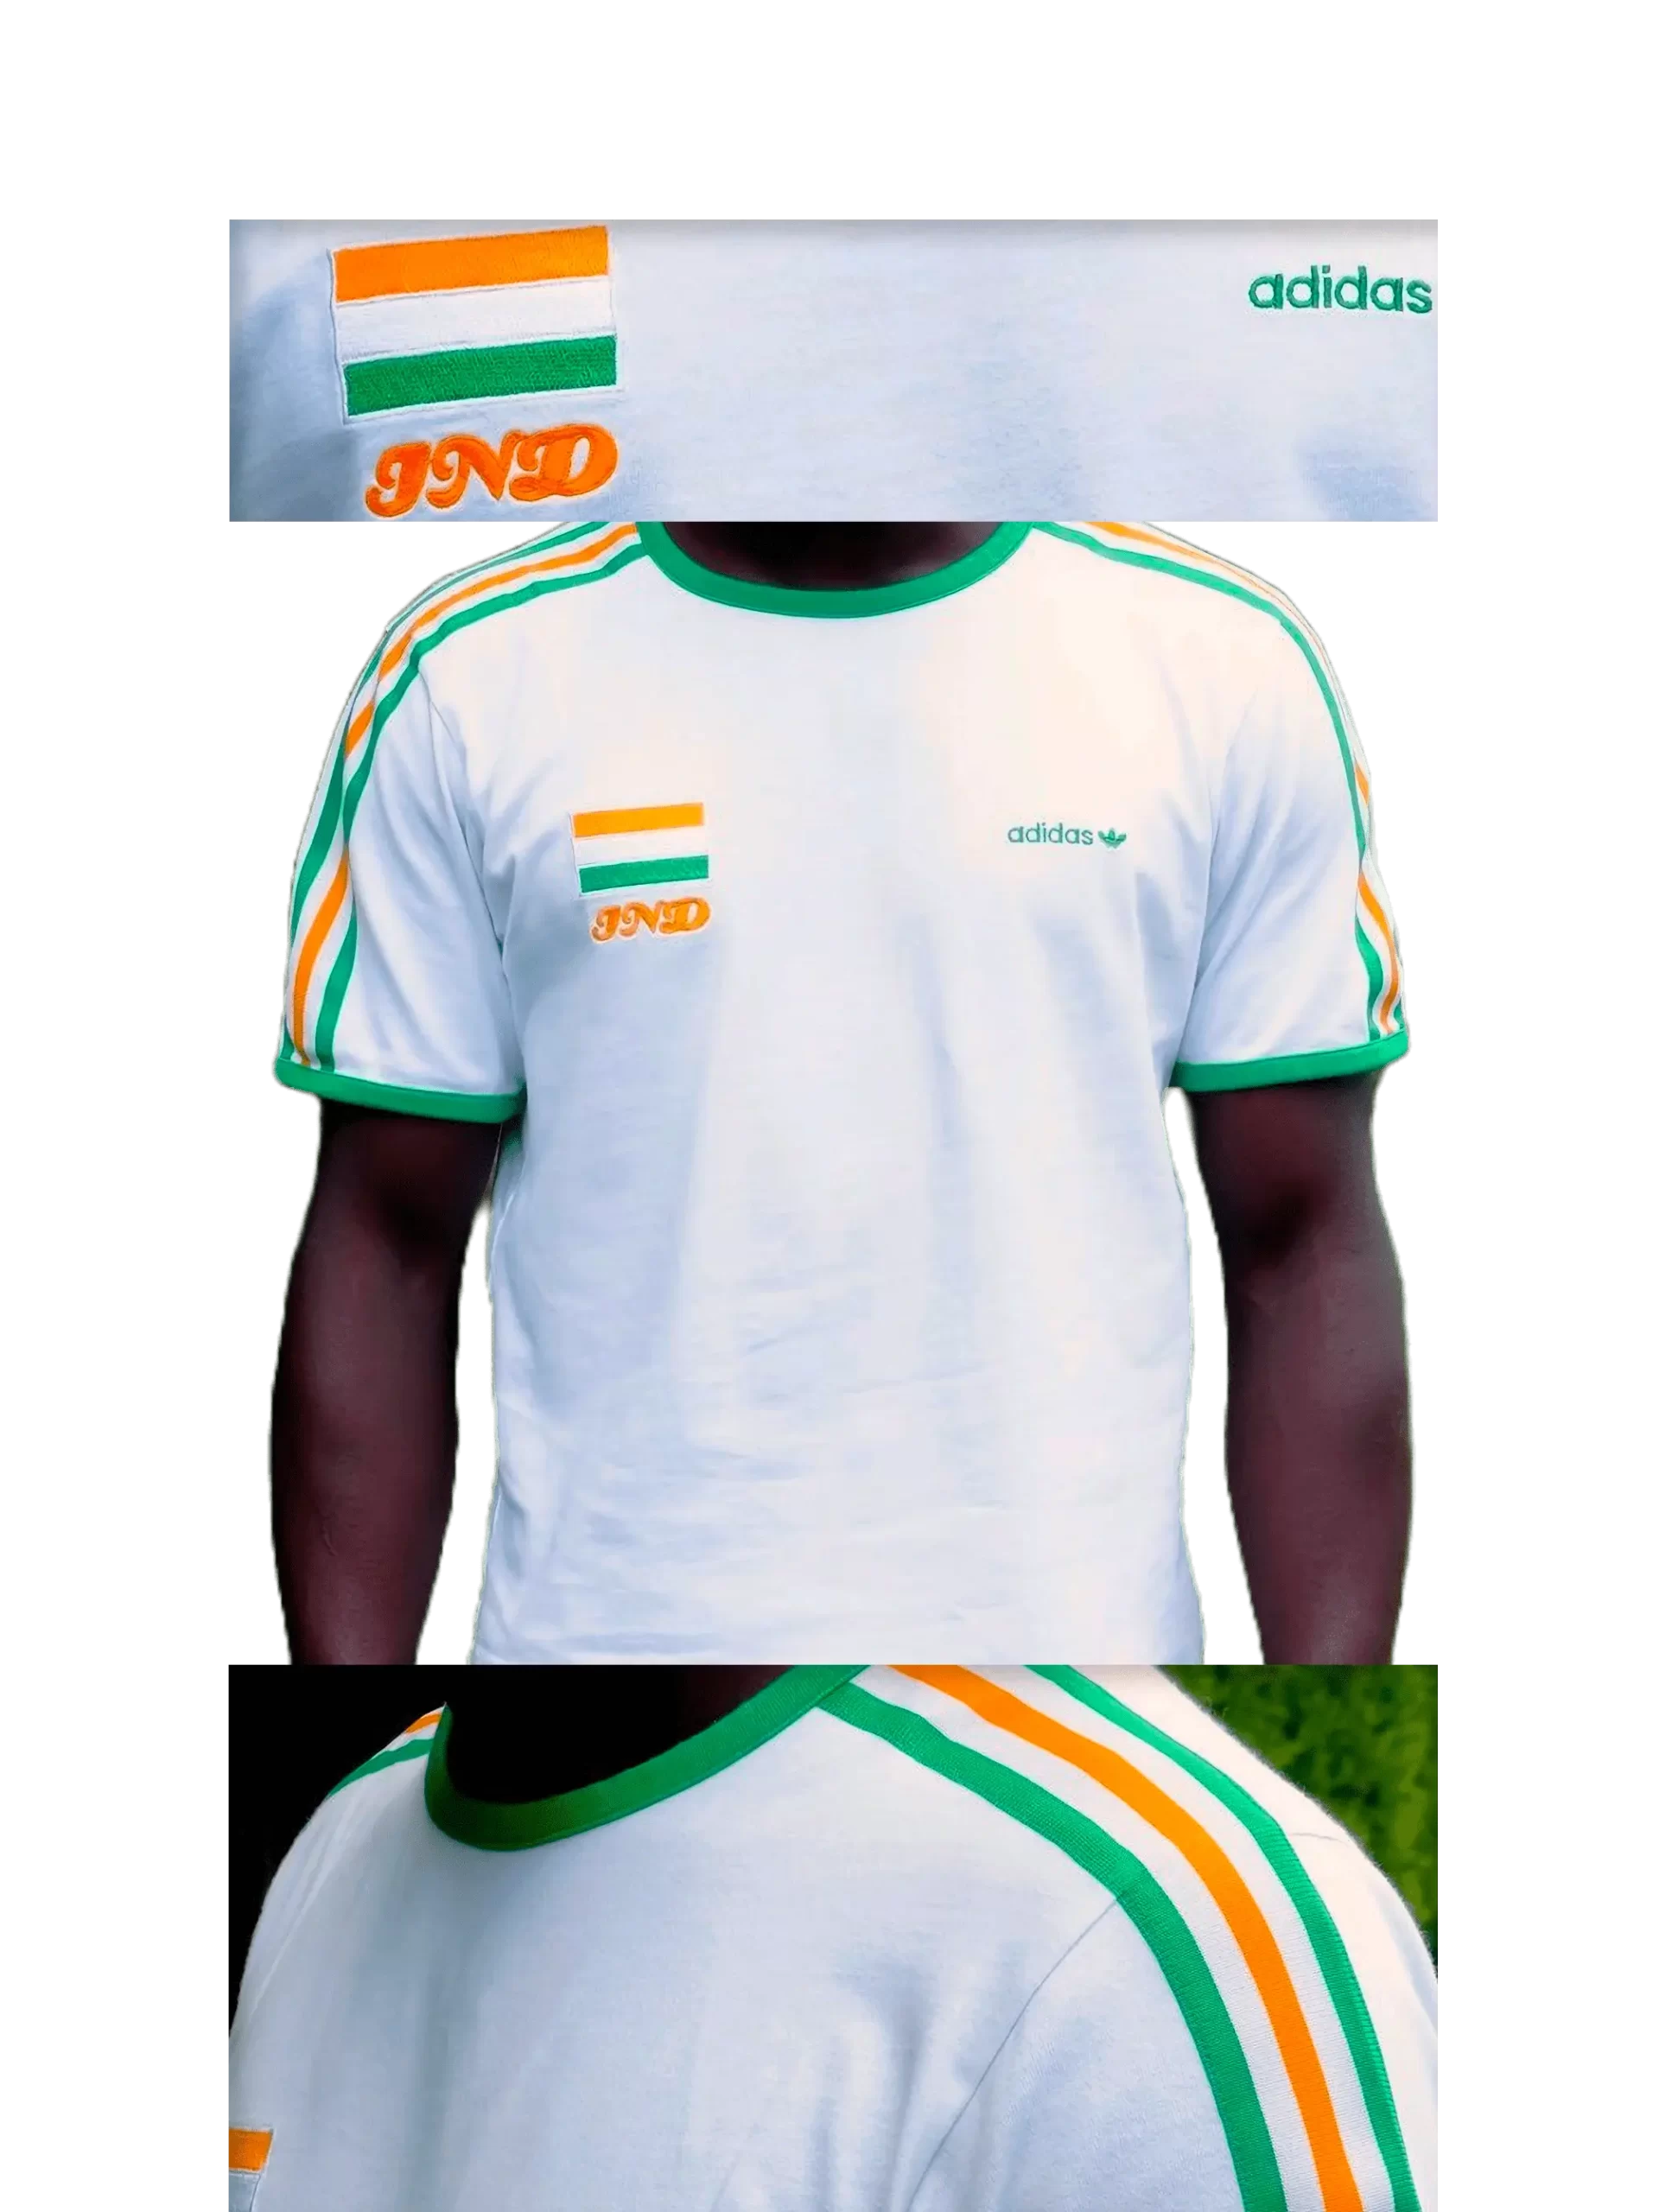 Men's 2005 India T-Shirt by Adidas Originals: Proven (EnLawded.com file #lmchk72372ip2y124134kg9st)